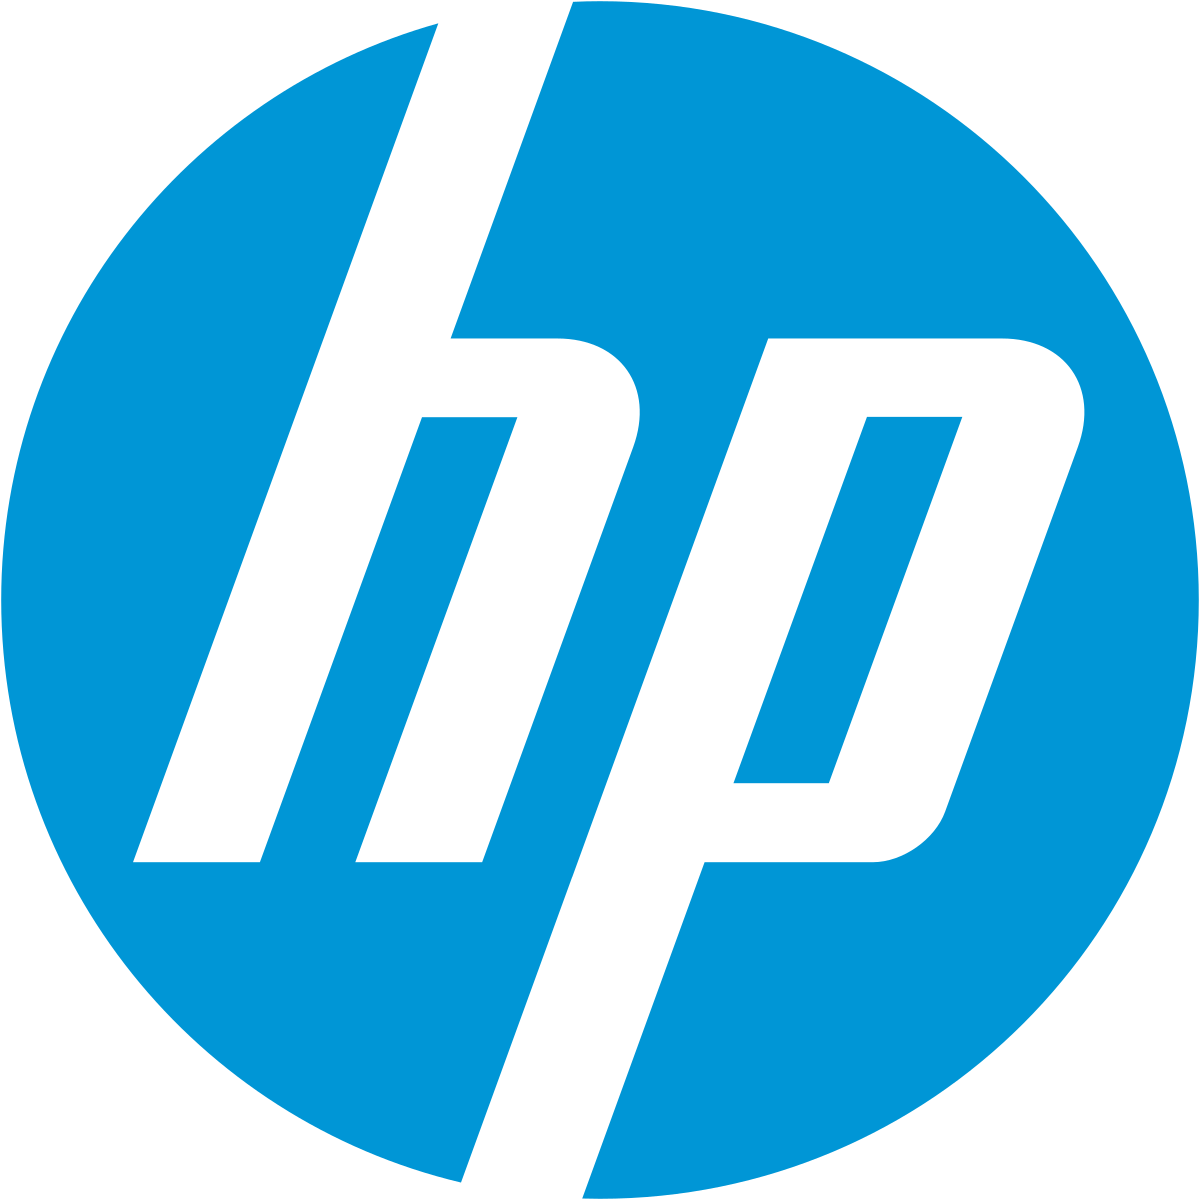 Nouveau ! Partenariat exclusif HP inc